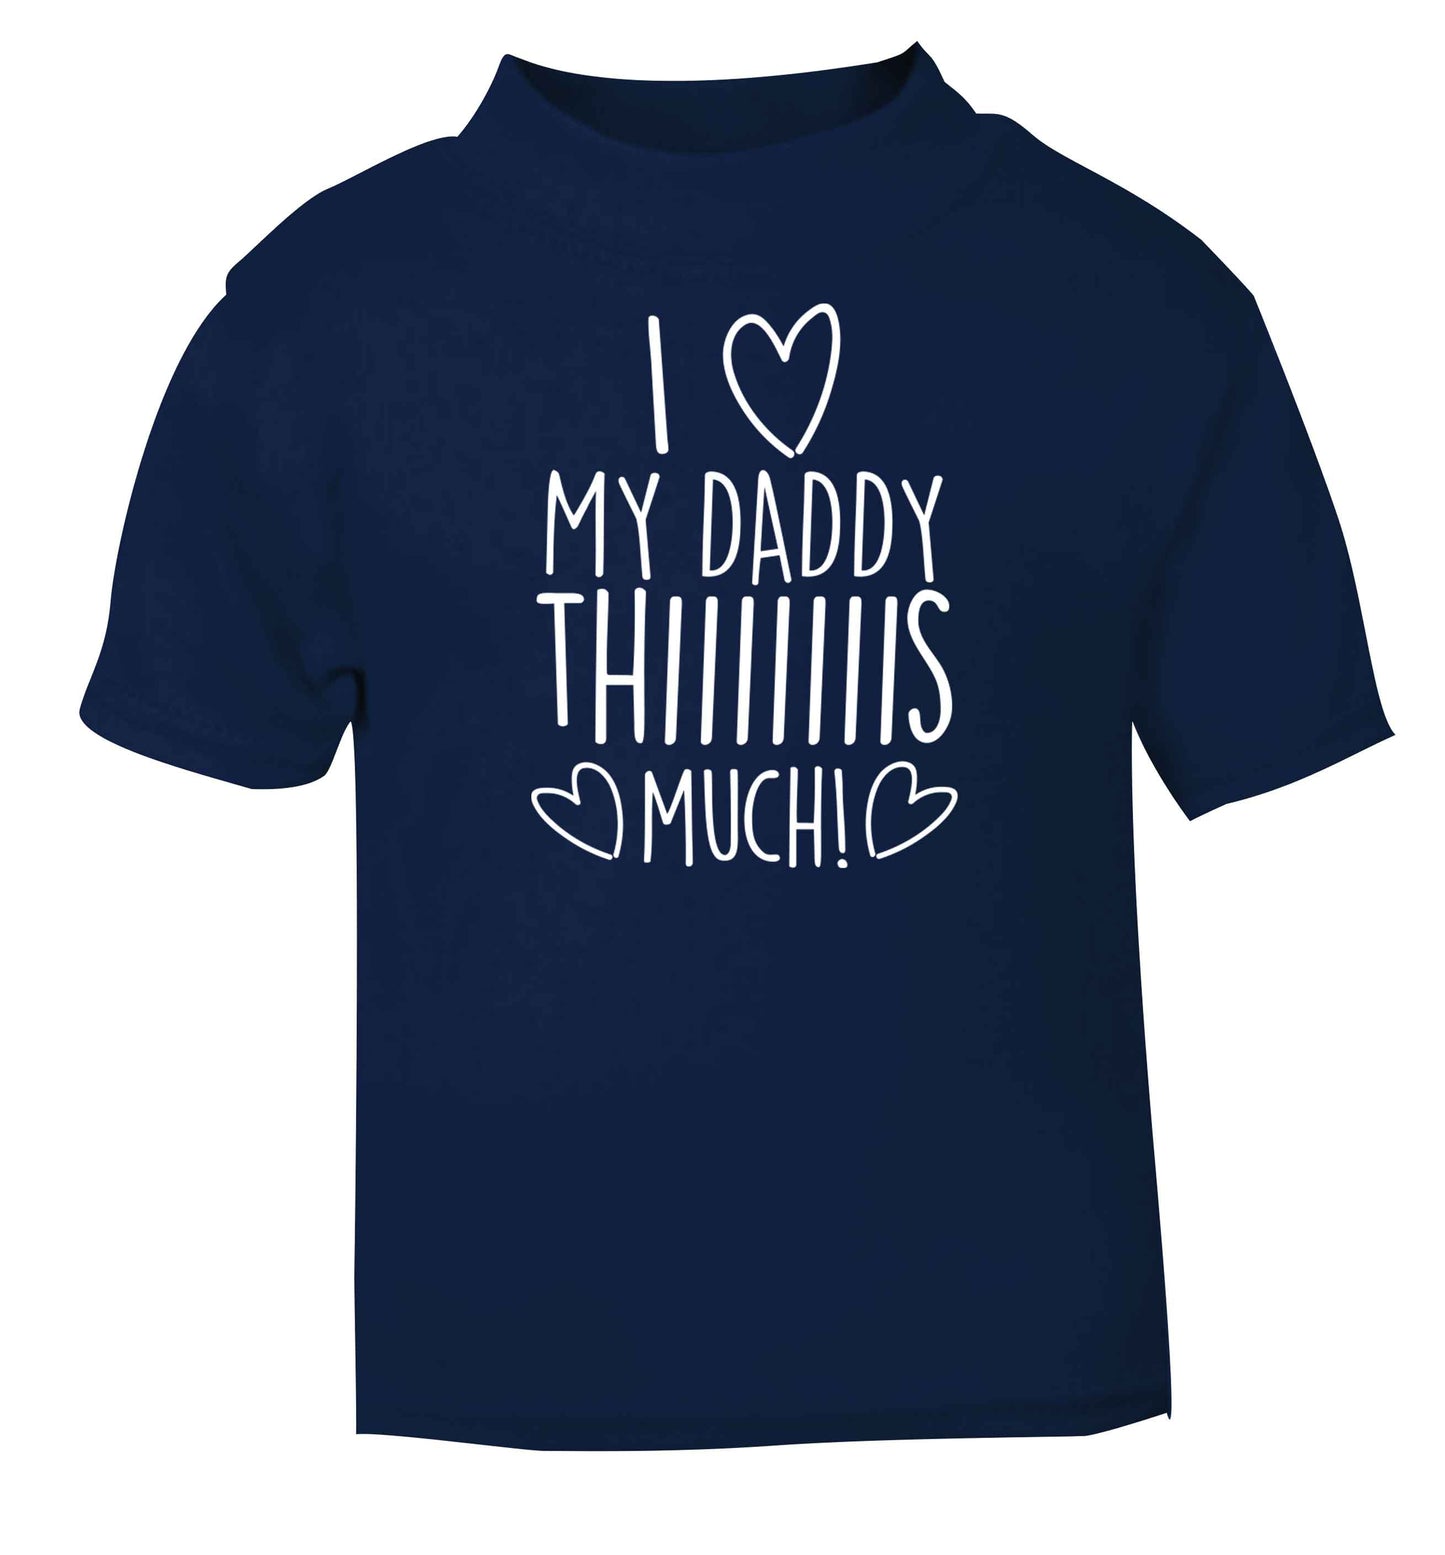 I love my daddy thiiiiis much! navy baby toddler Tshirt 2 Years